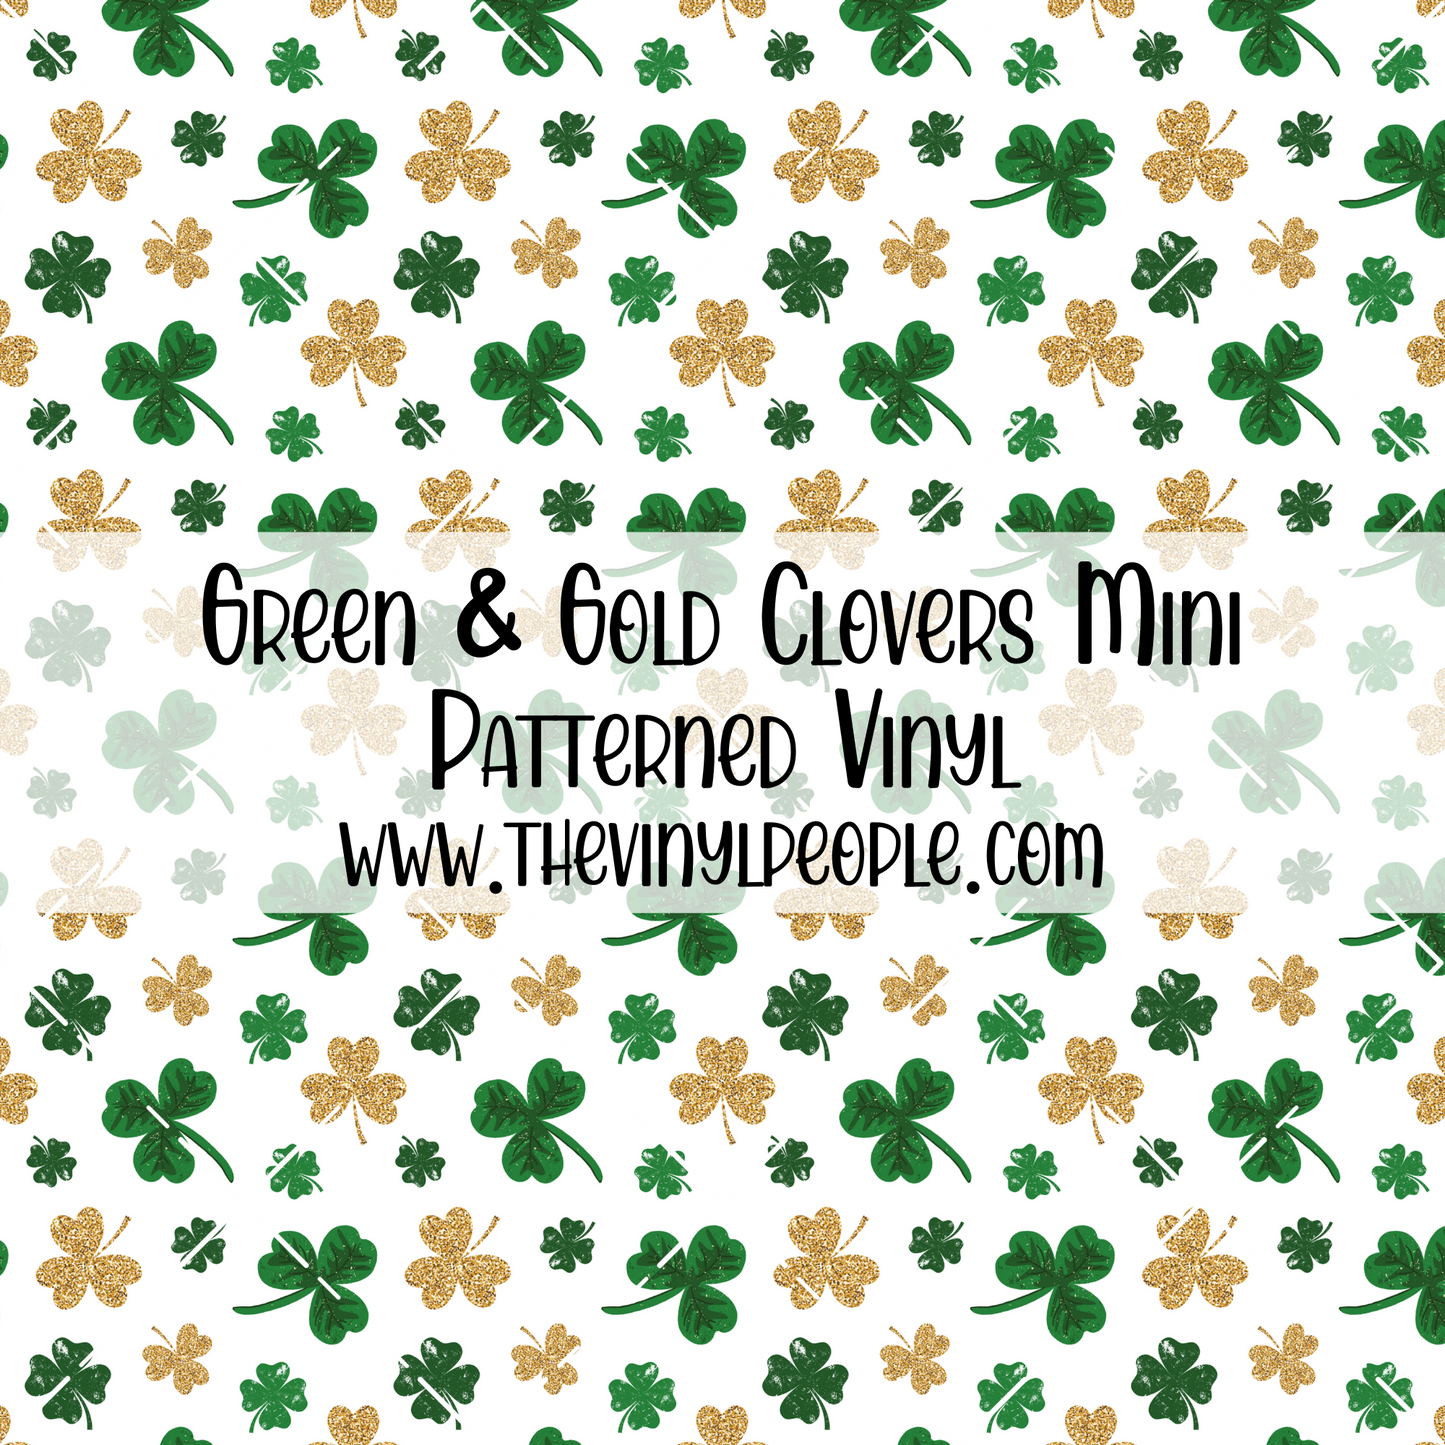 Green & Gold Clovers Patterned Vinyl